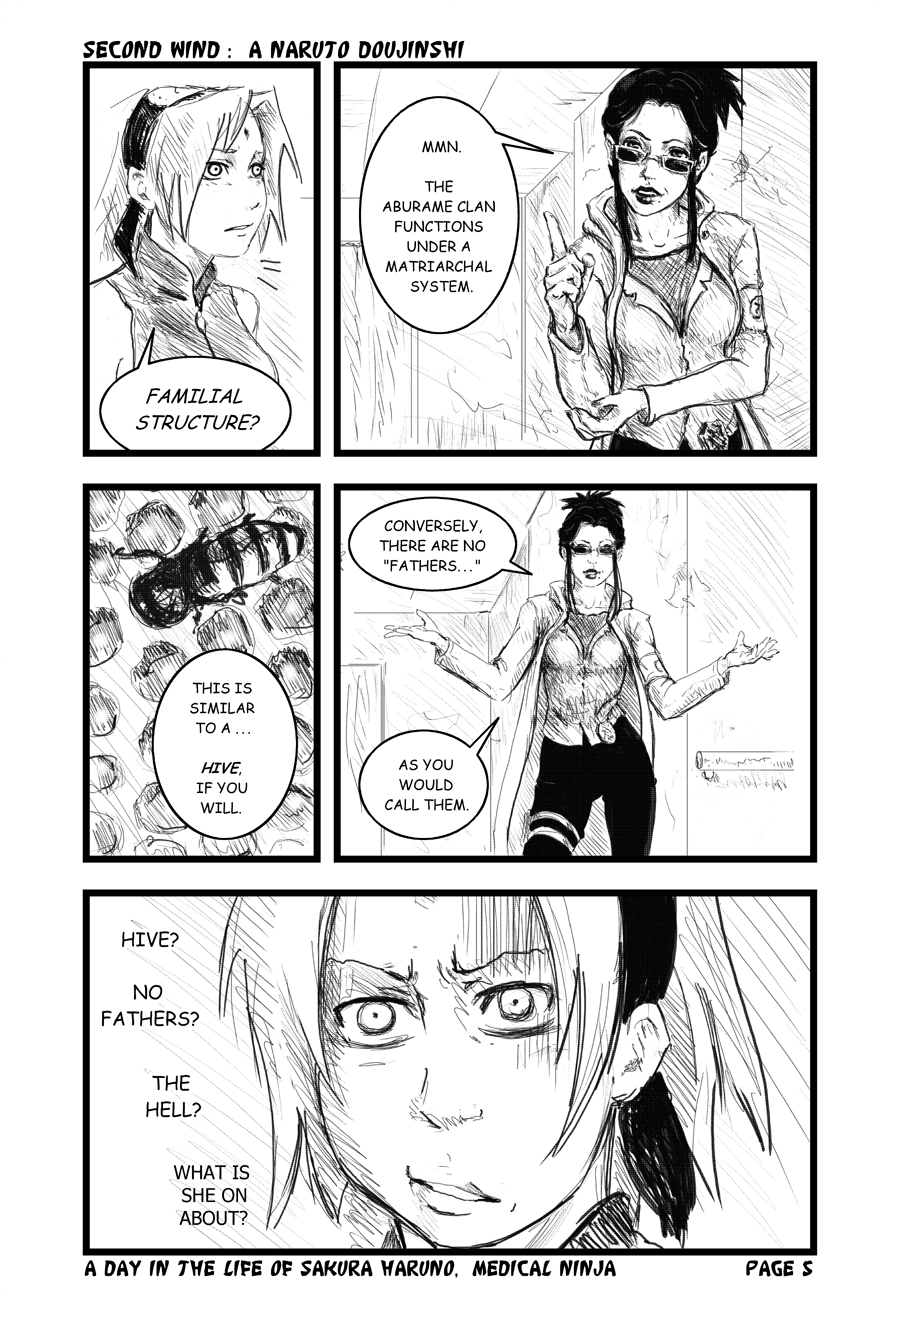 Sakura Haruno, Medical Ninja: P5 by Michimoro